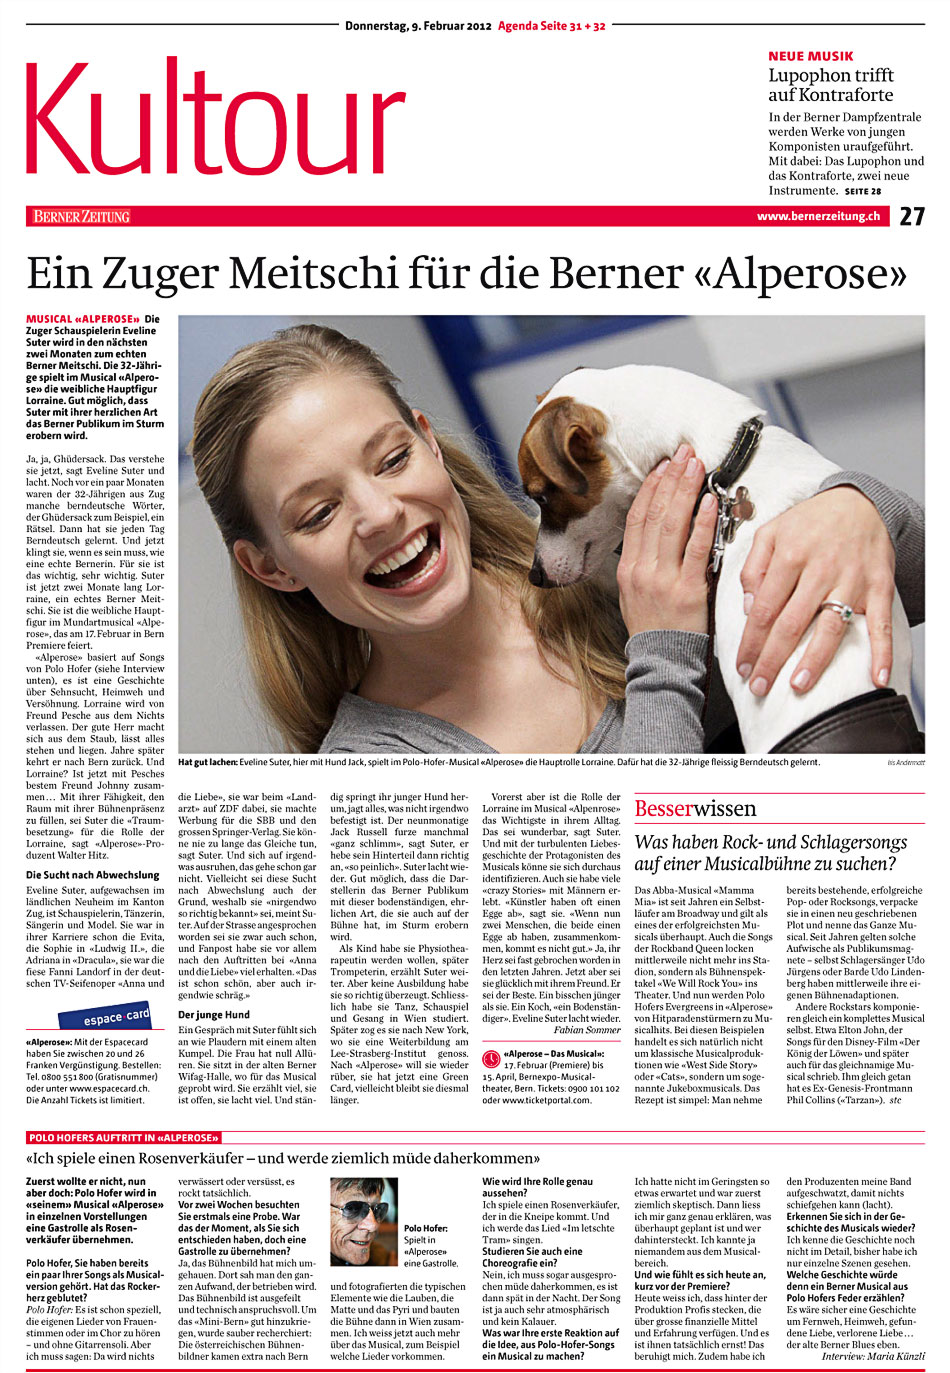 Berner Zeitung / Februar 2012